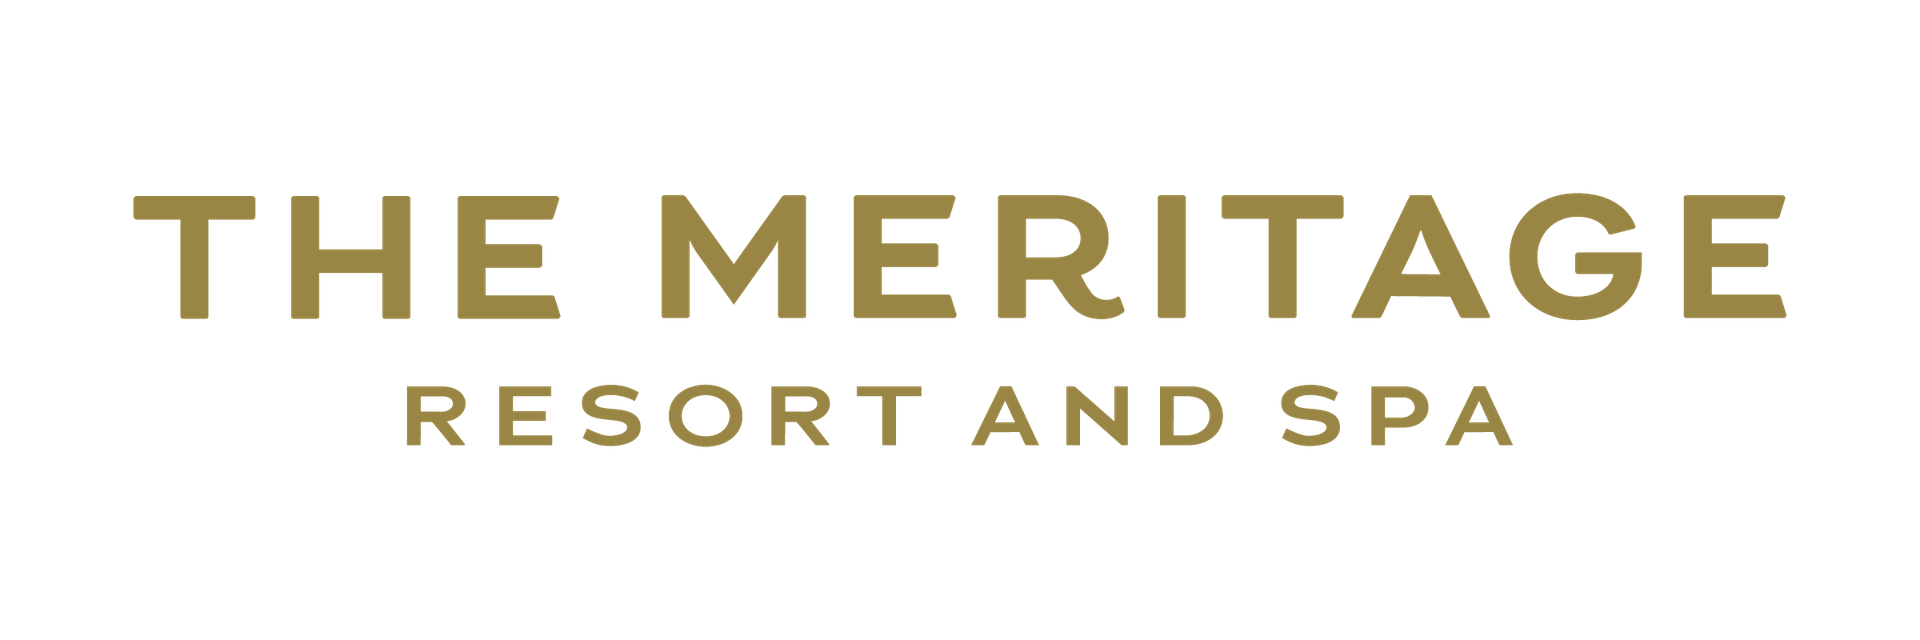 MeritageResort Logo 871c RGB West Coast Wine Event